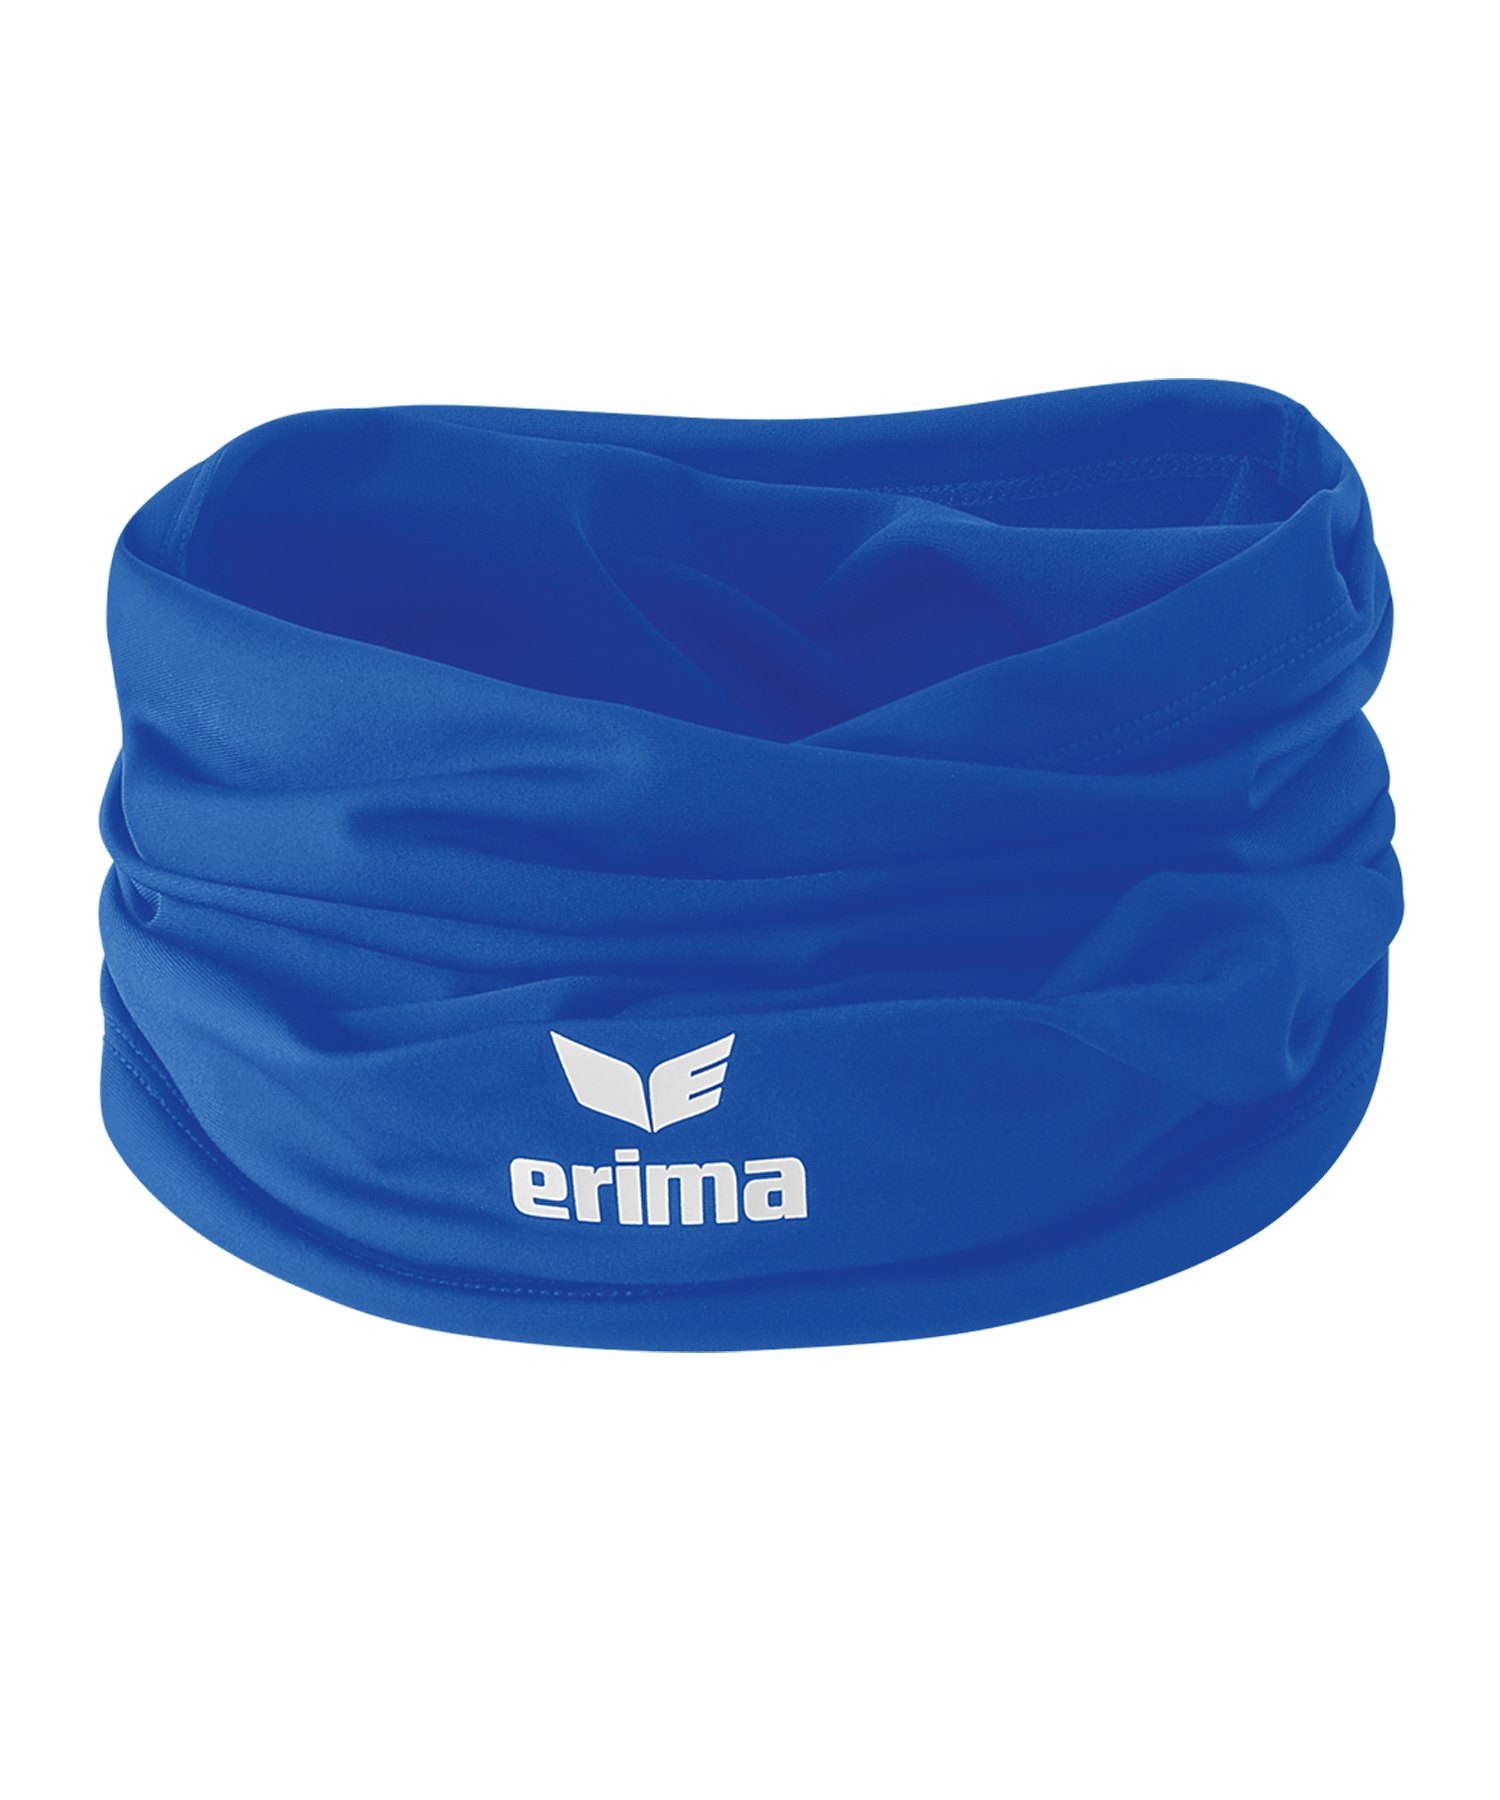 Erima Erima Nackenwärmer Neckwarmer Blau - blau